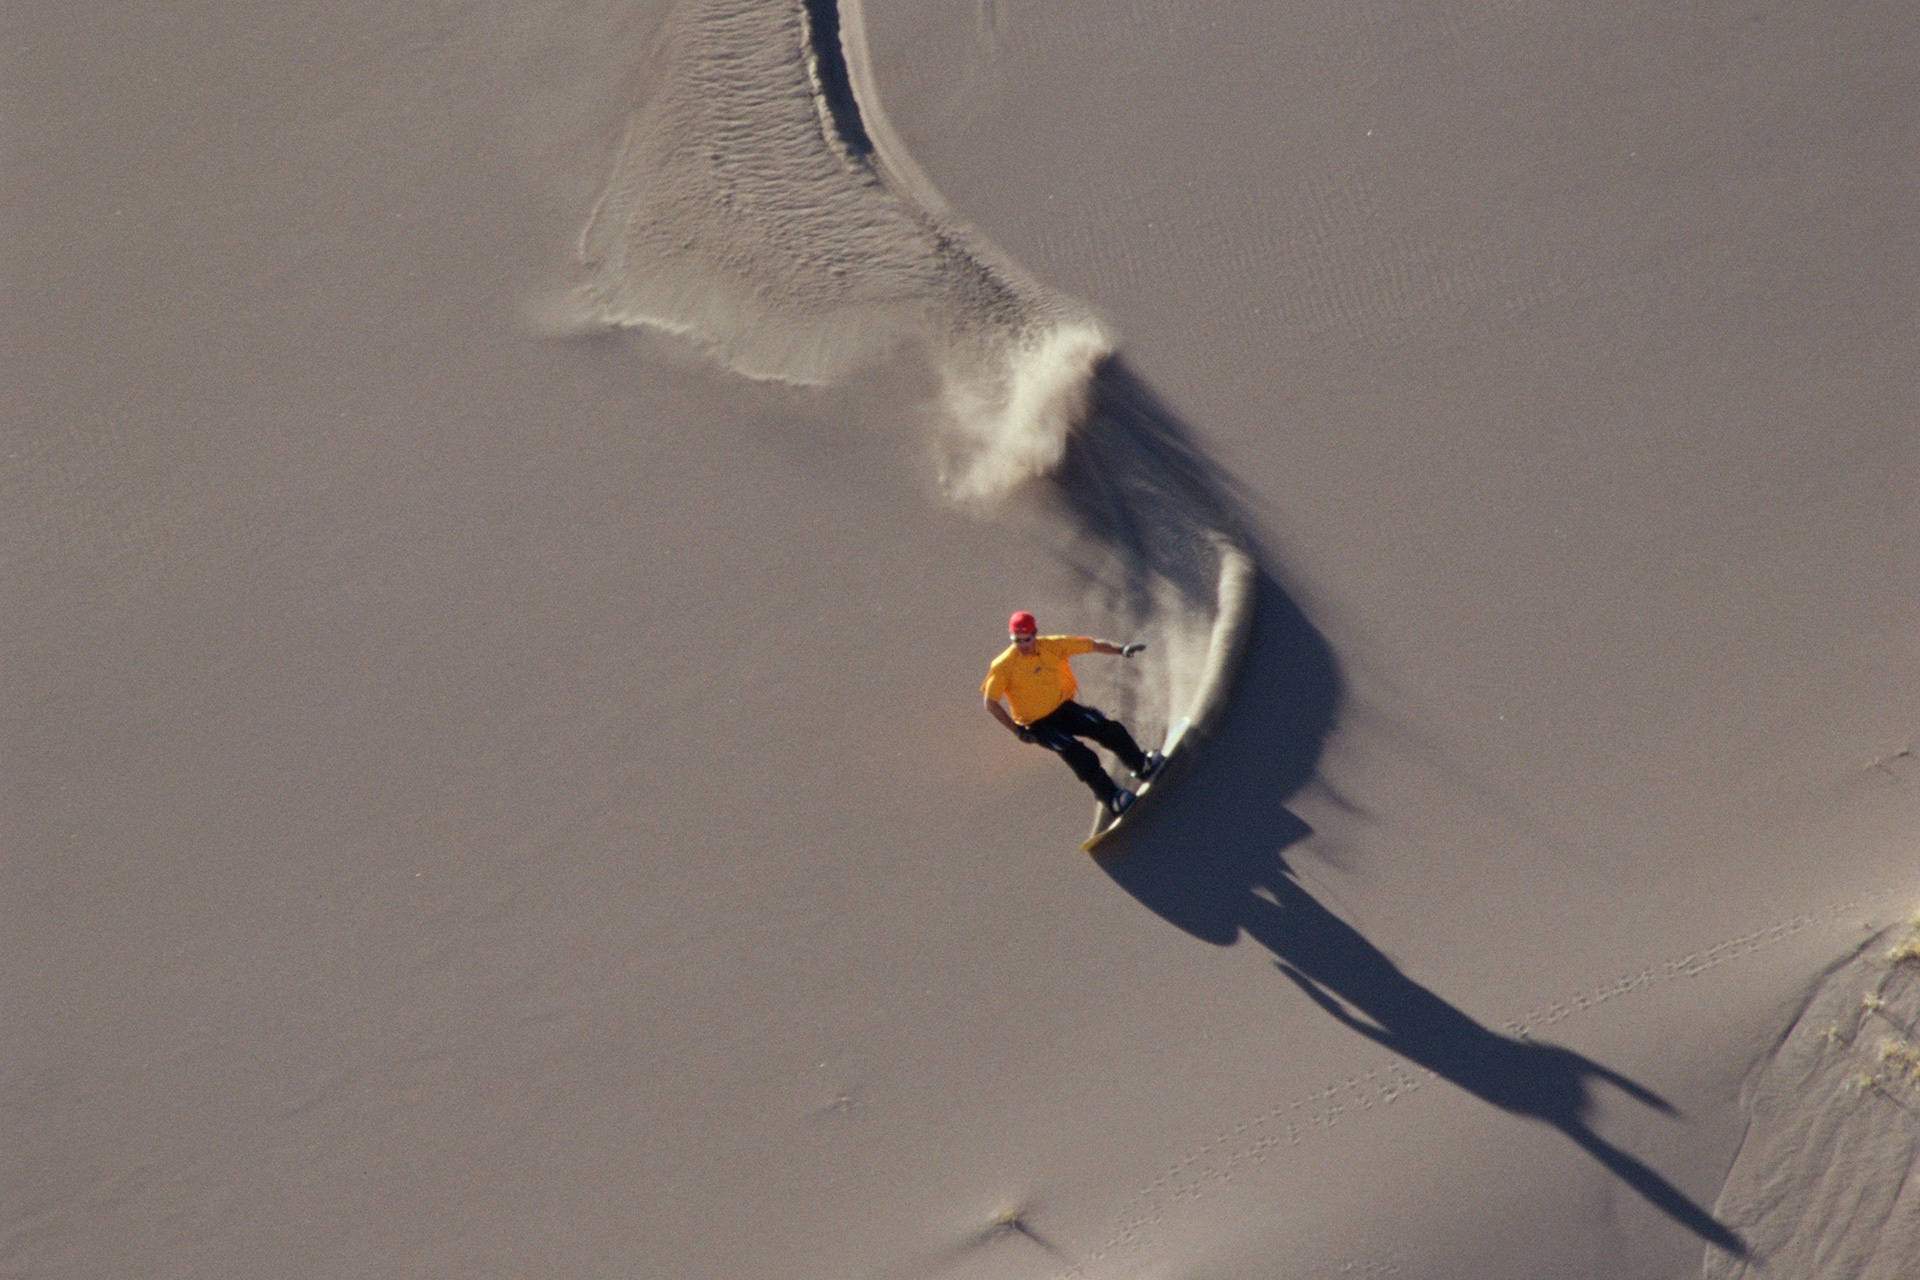 Colorado's Sand Dunes Skiing